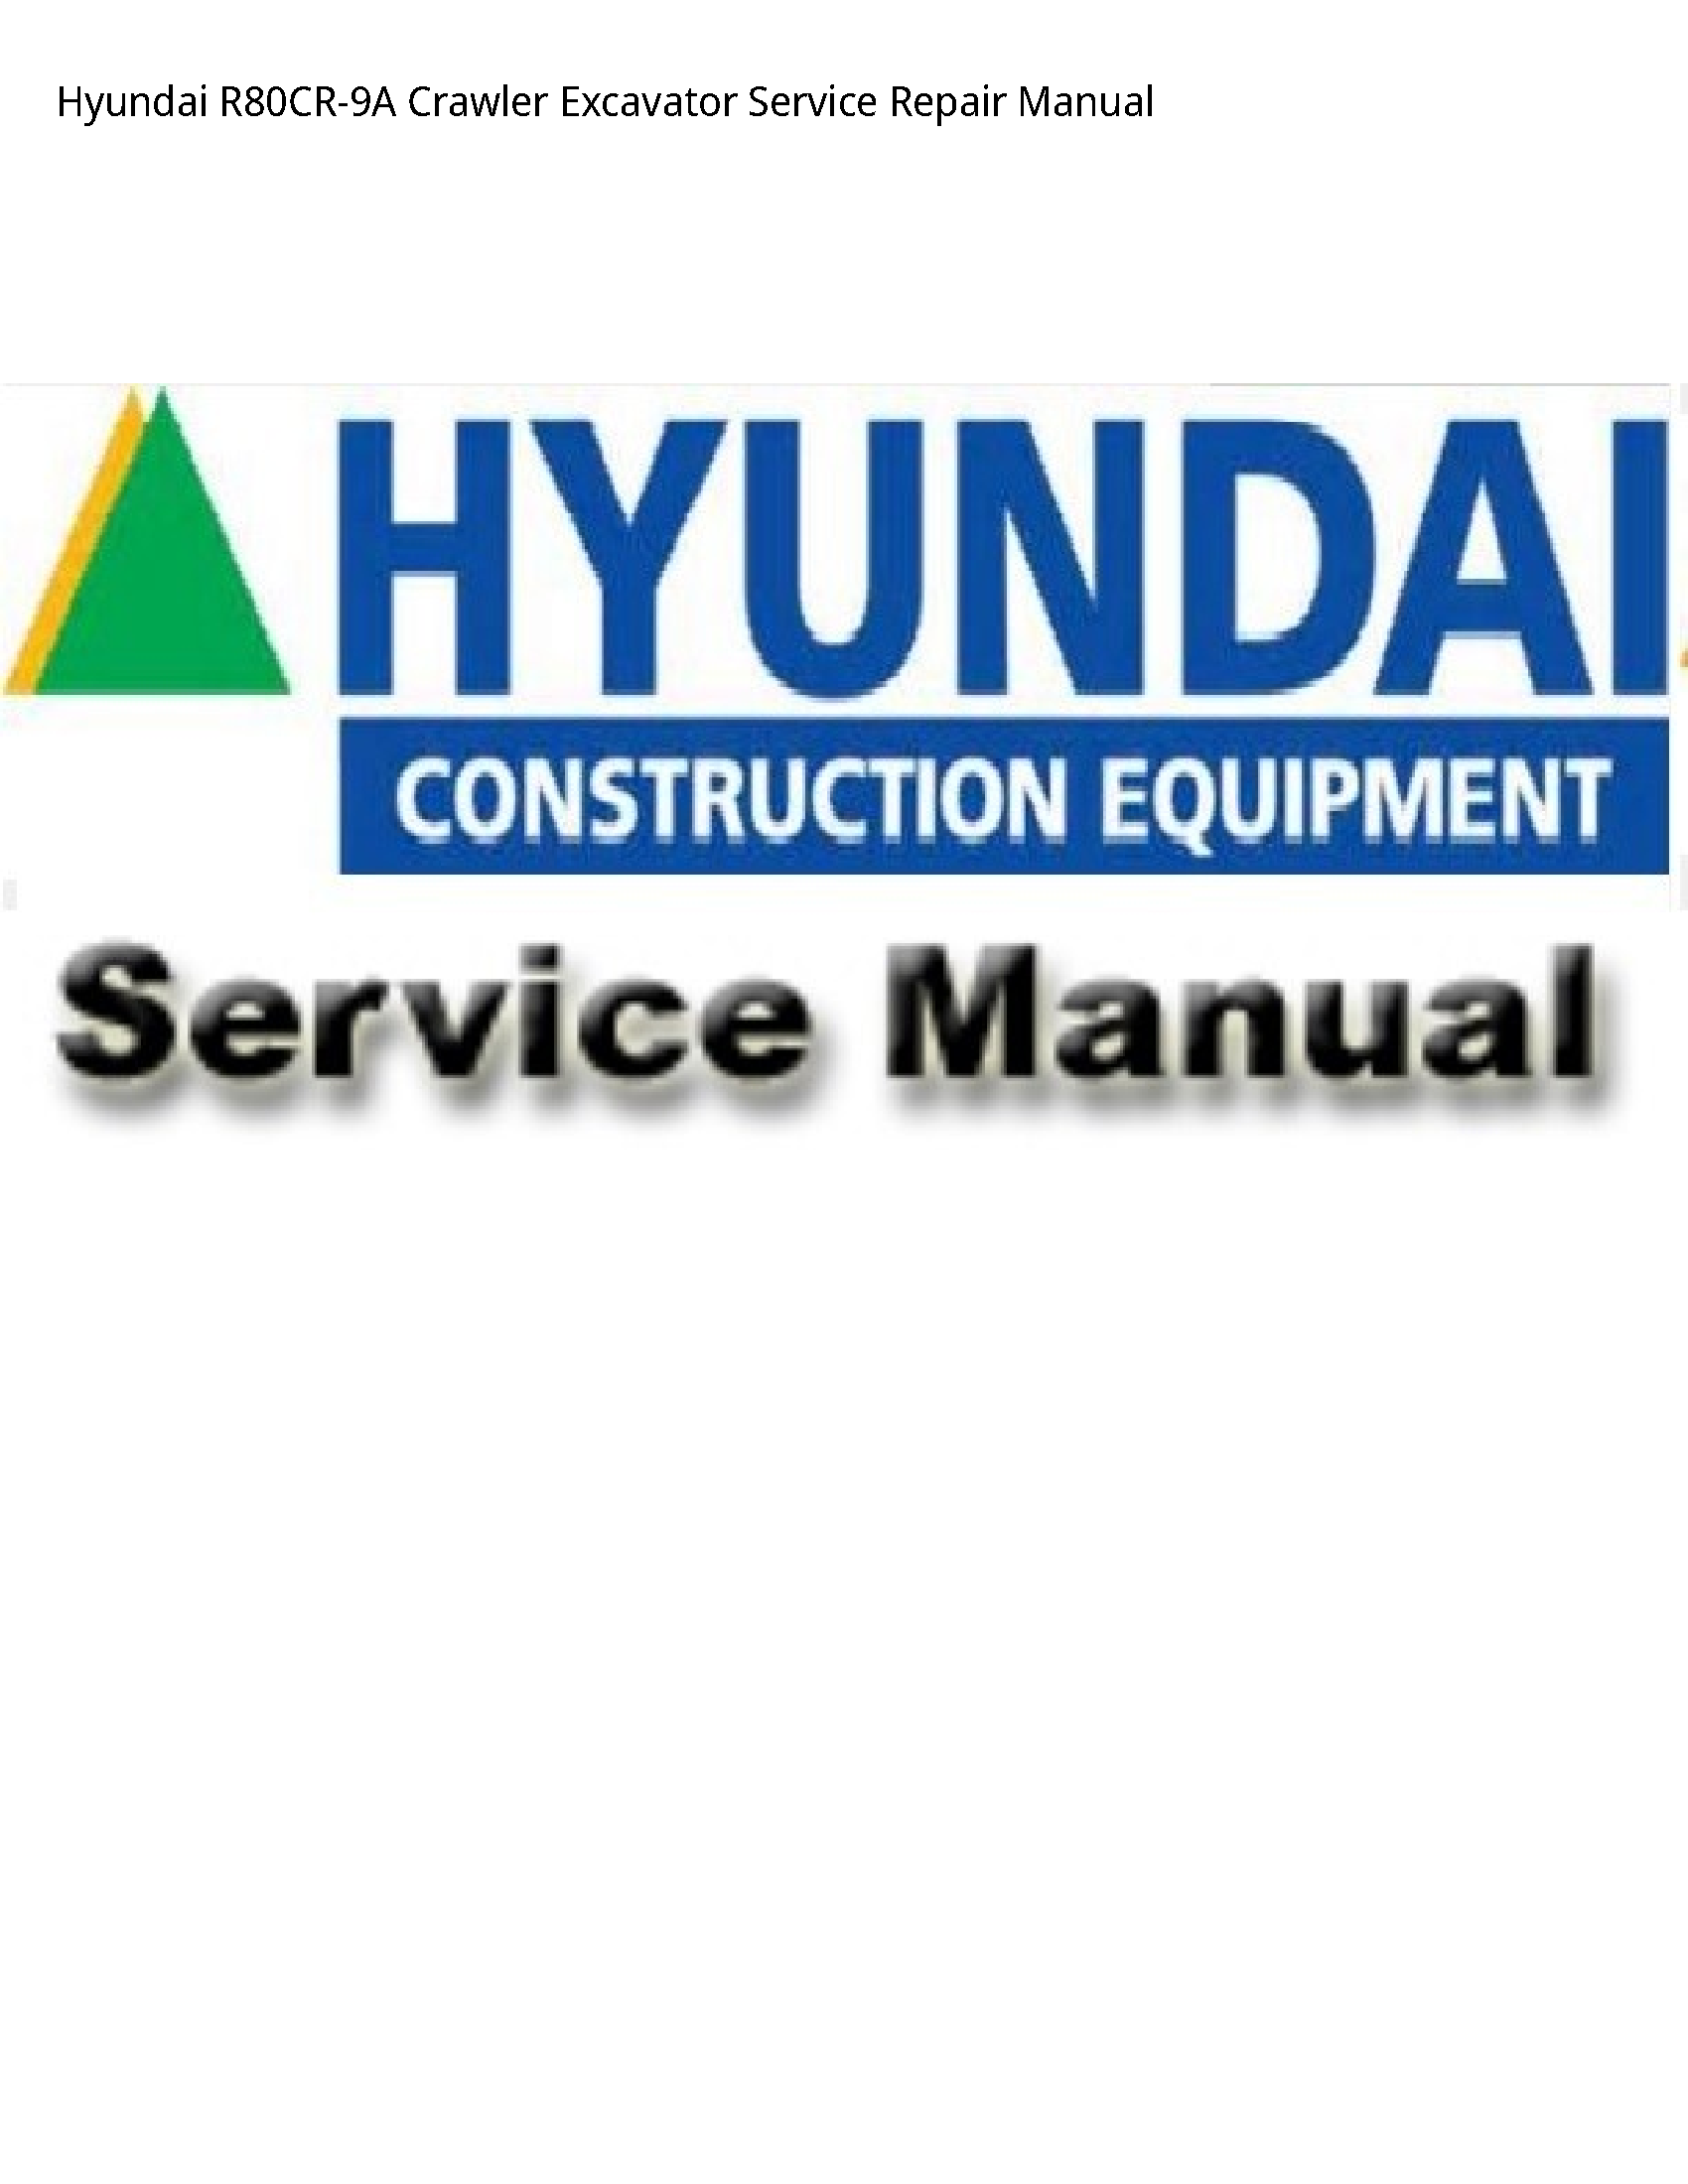 Hyundai R80CR-9A Crawler Excavator manual